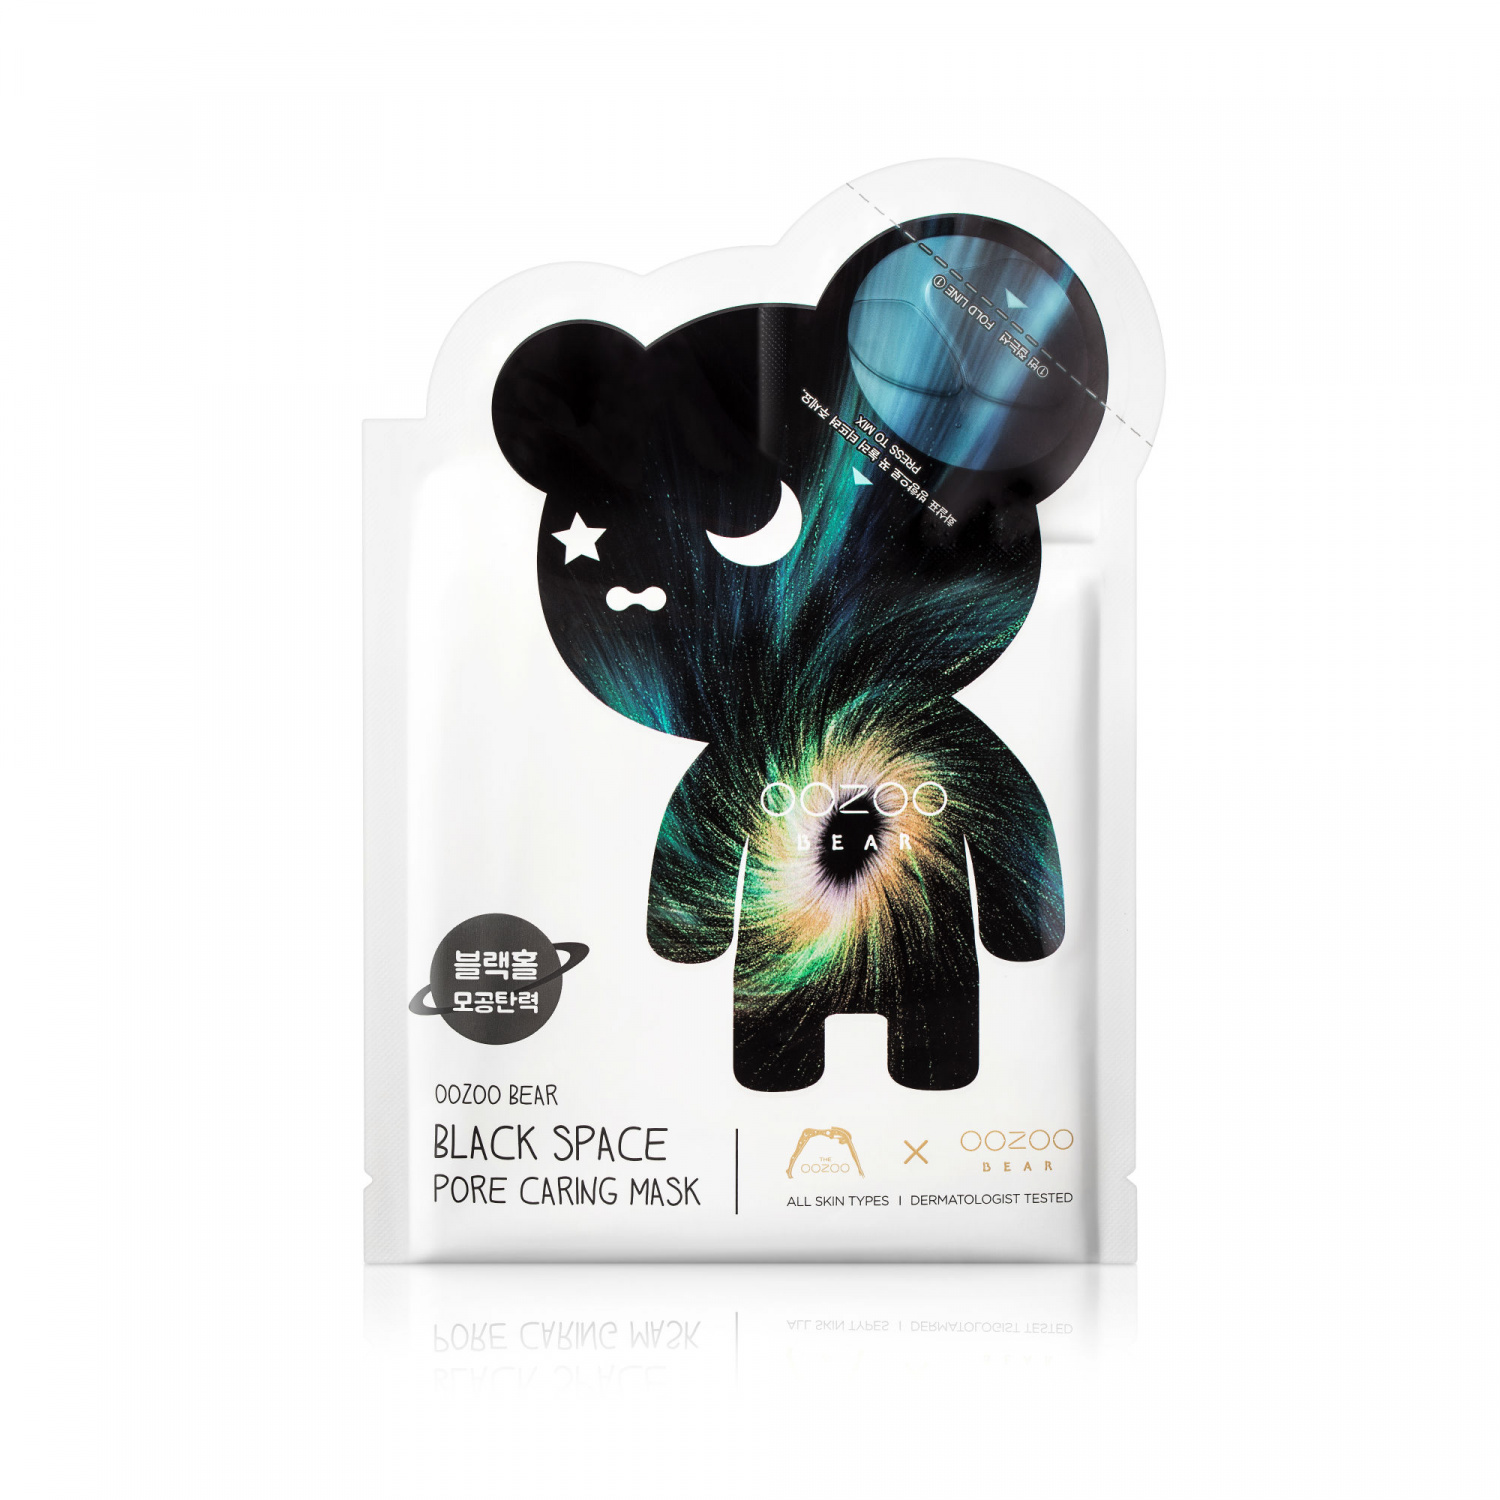 The OOZOO Bear black space pore caring mask - интернет-магазин профессиональной косметики Spadream, изображение 28908